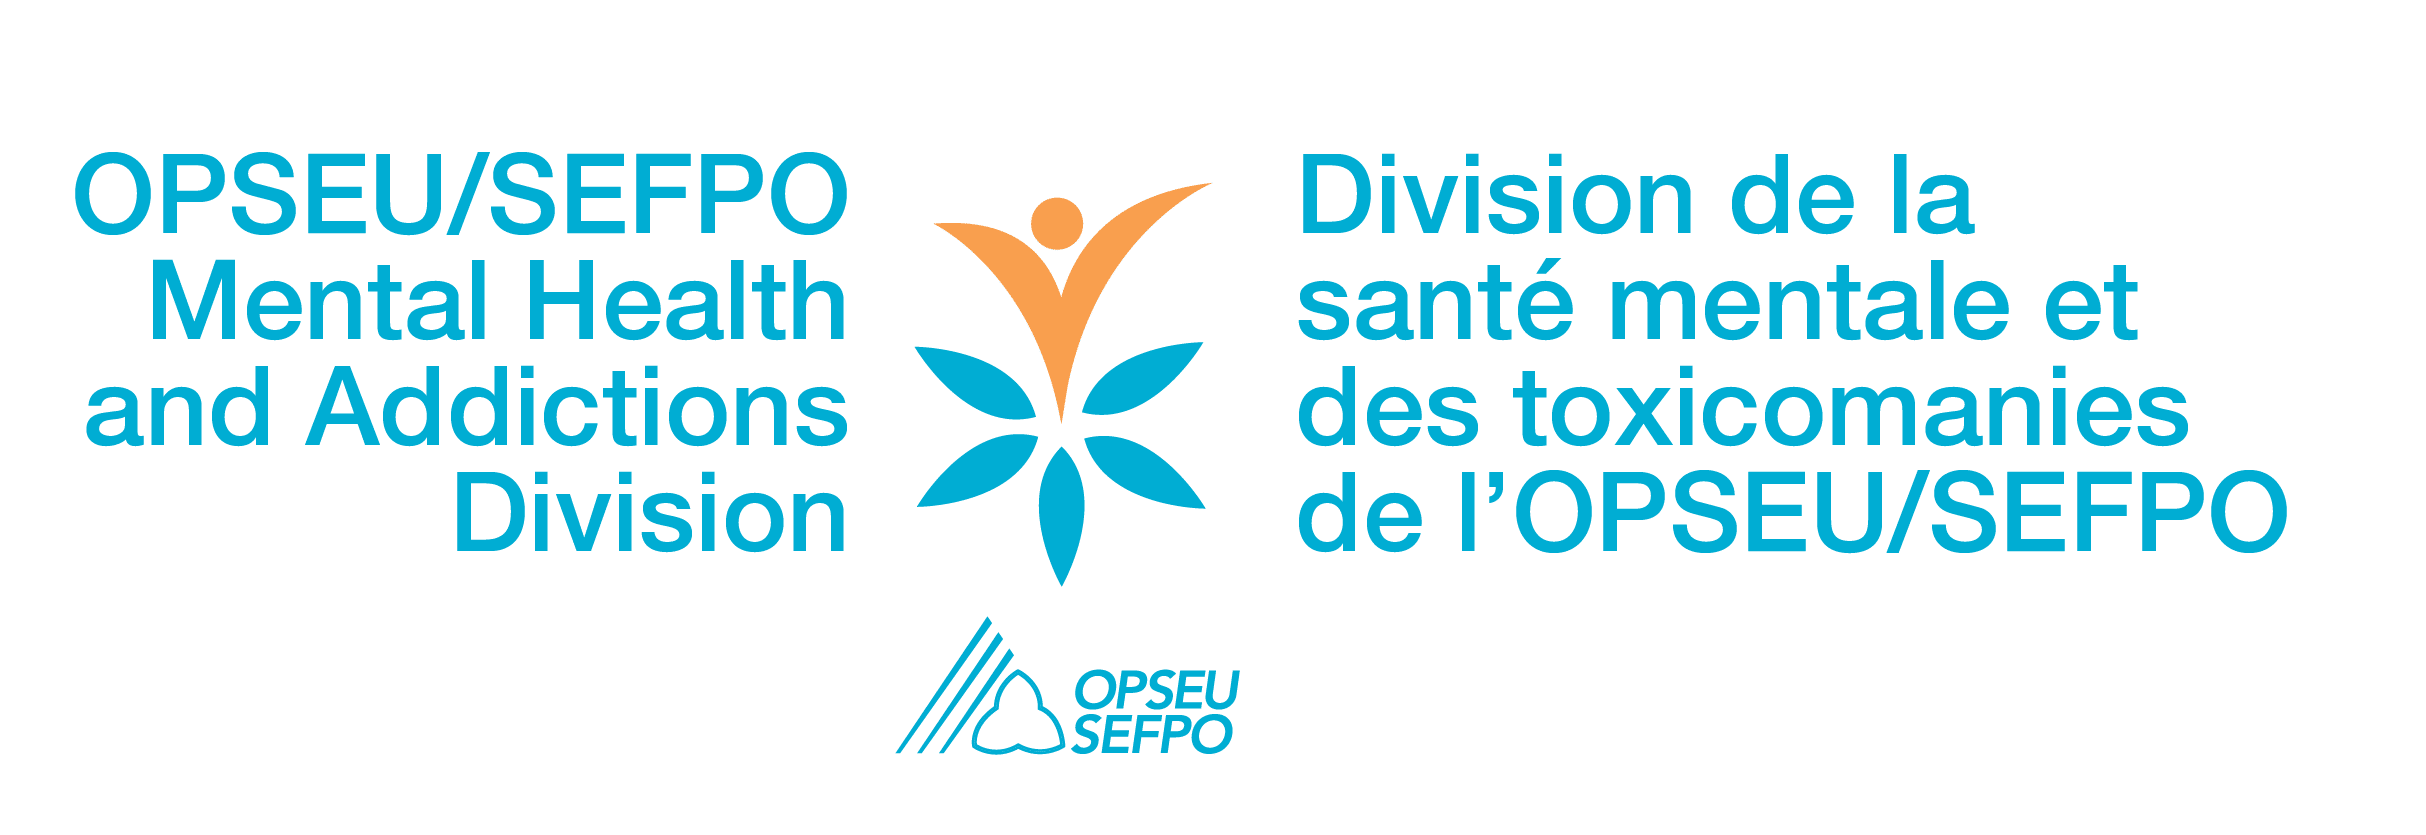 OPSEU/SEFPO Mental Health and Addictions Division / Division de la sante mentale et des toxicomanies de l'OPSEU/SEFPO